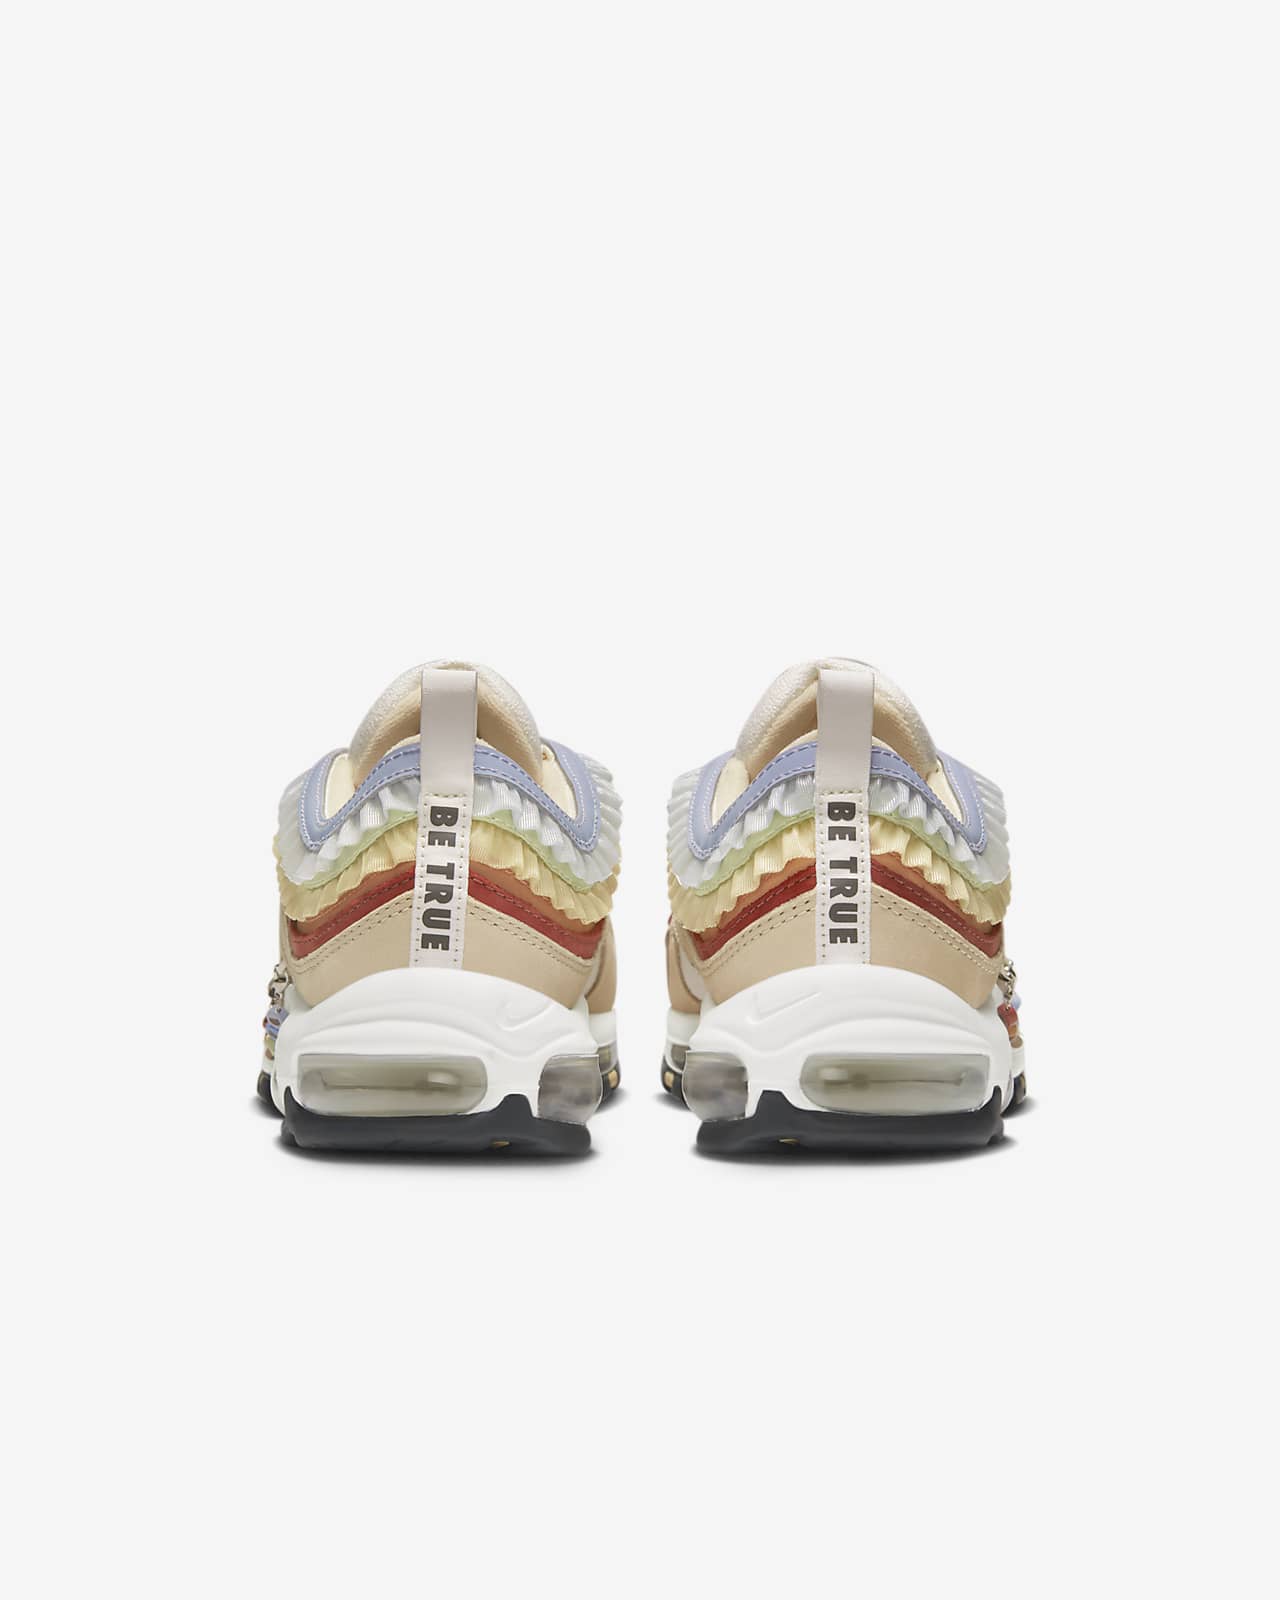 Nike Air Max 97 Be True Shoes